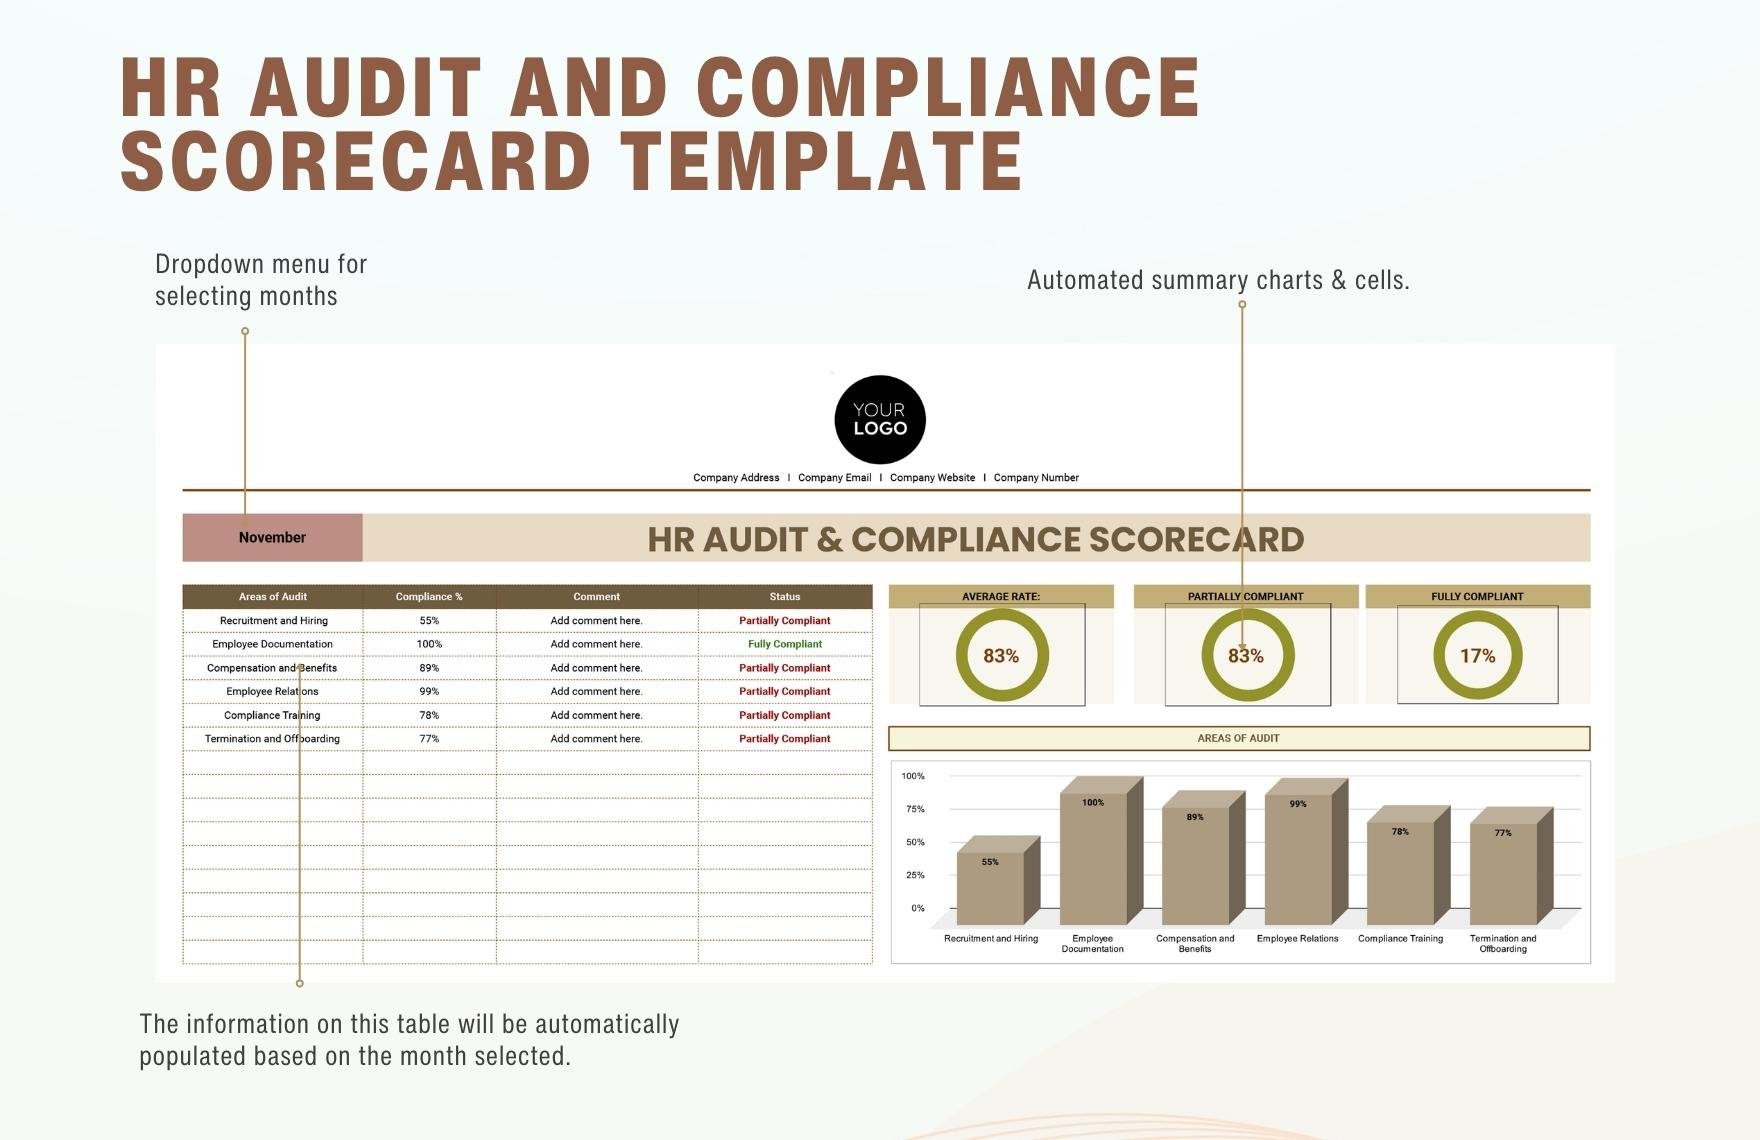 HR Audit and Compliance Scorecard Template